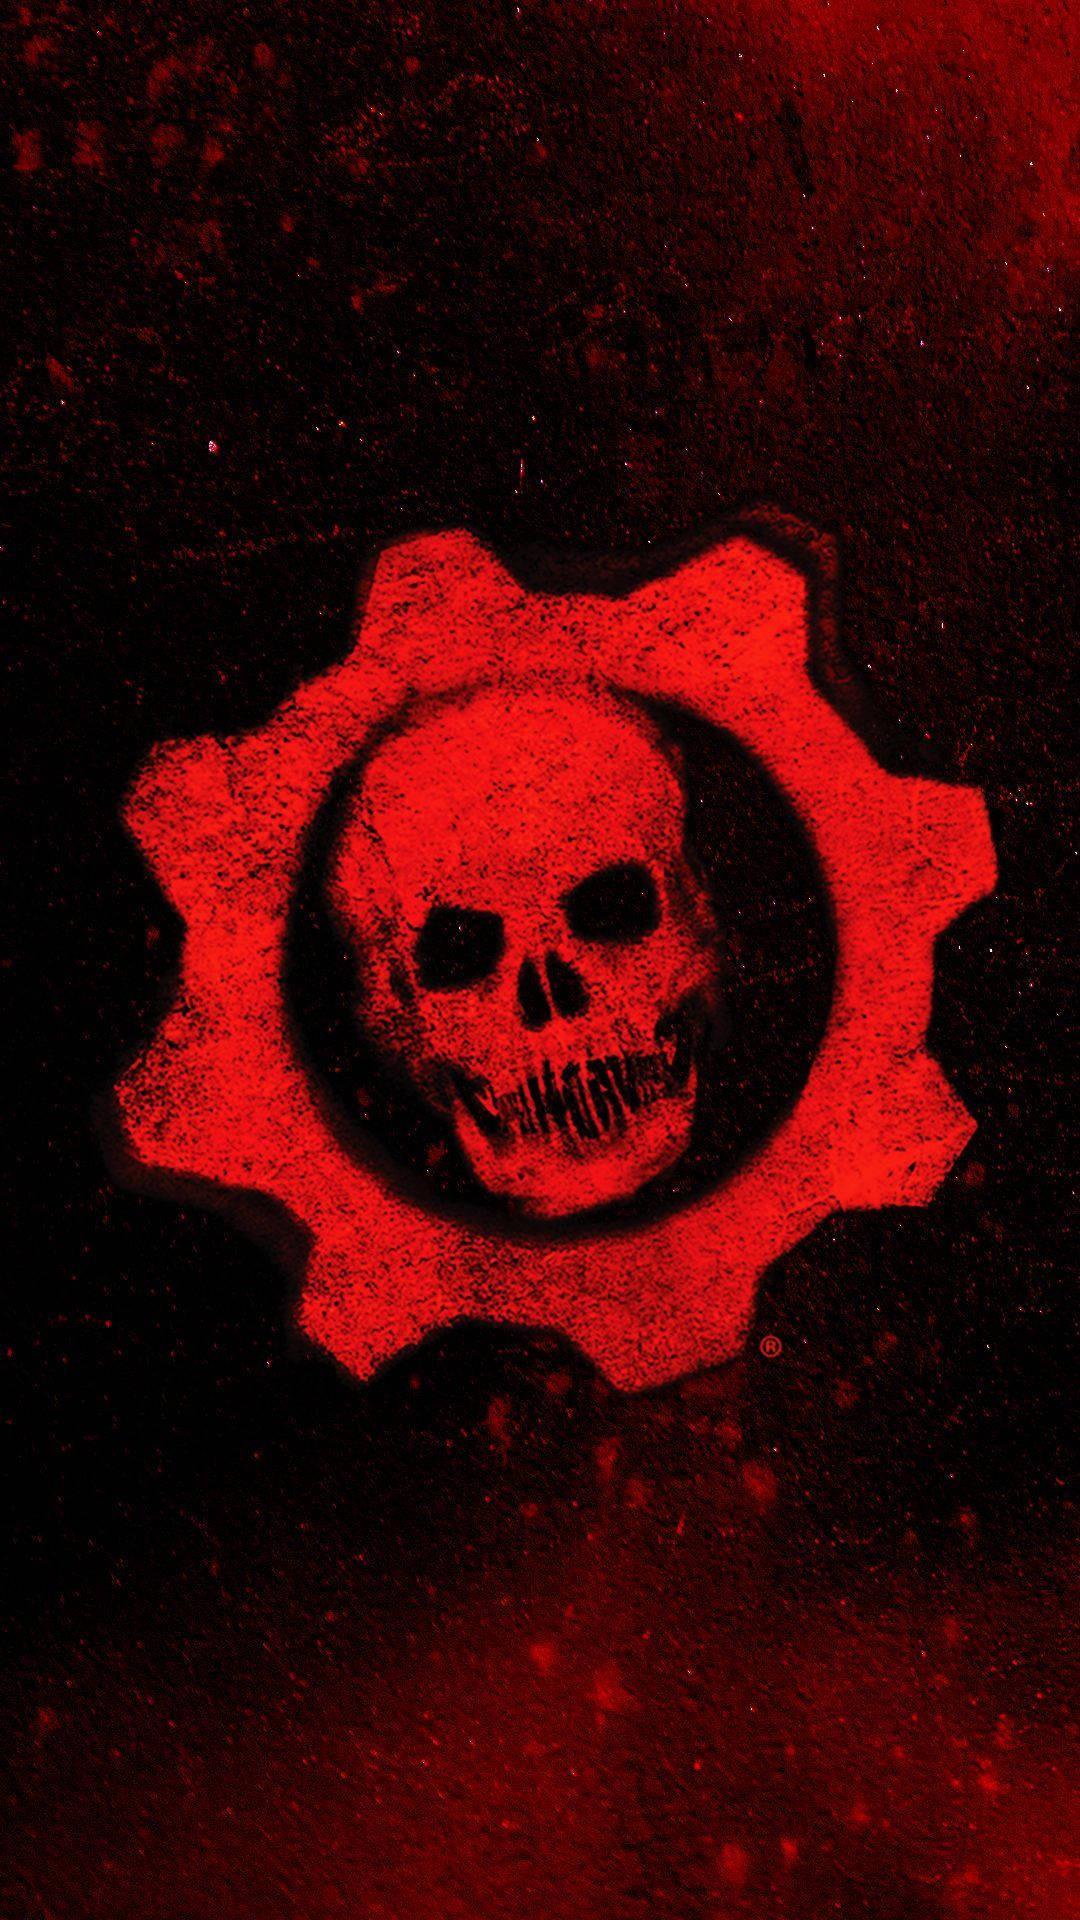 A Gear wielding a massive chain gun blasts through the battlefield in "Gears of War 5" Wallpaper